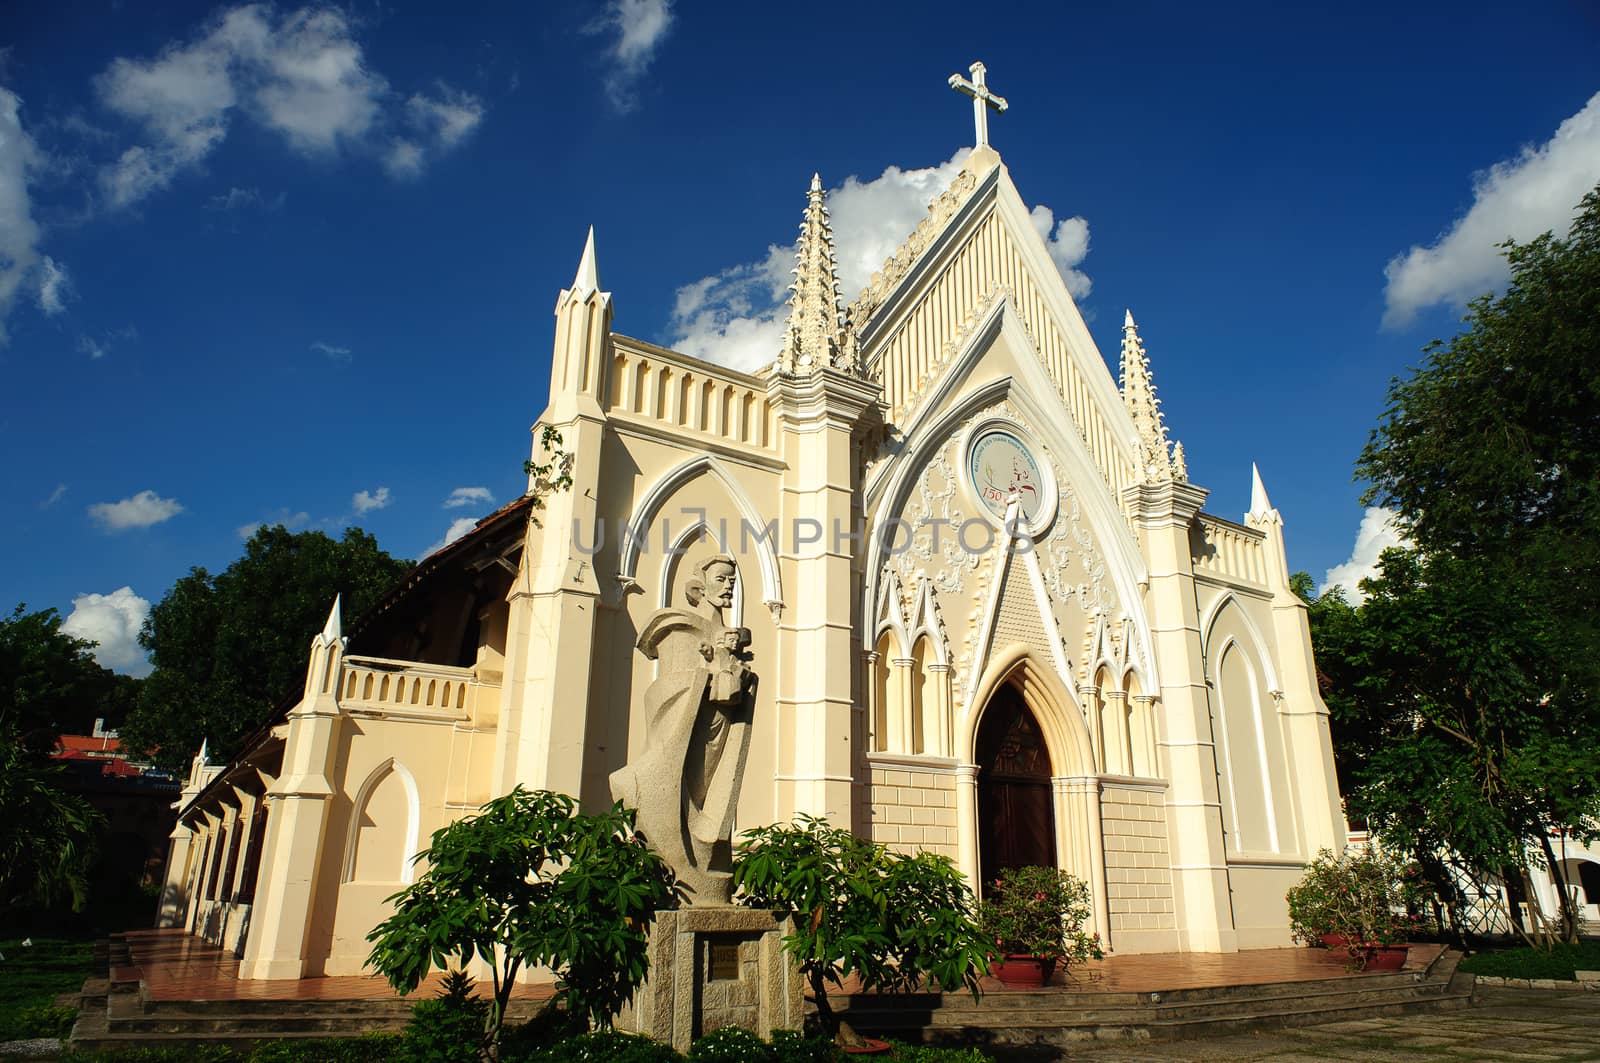 HOCHIMINH - AUGUST 17: The chapel in Saint Joseph seminary at Saigon - Hochiminh August 17, 2013 in Hochiminh city, Vietnam.